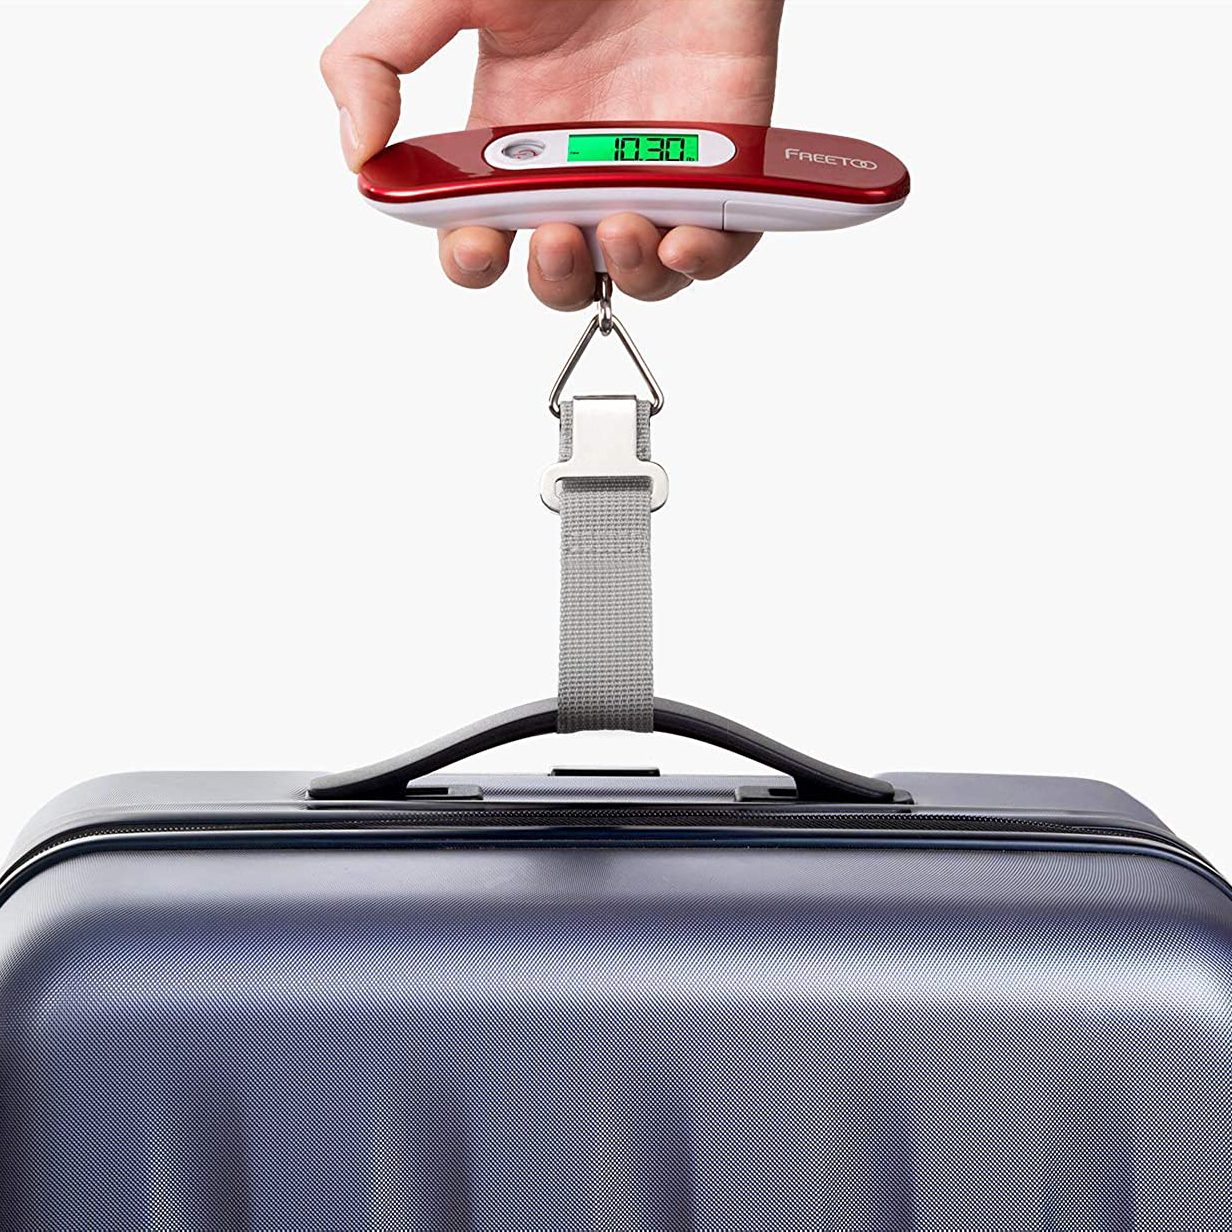 https://www.rd.com/wp-content/uploads/2023/02/FREETOO-Portable-Luggage-Scale_ecomm_via-amazon.com-1.jpg